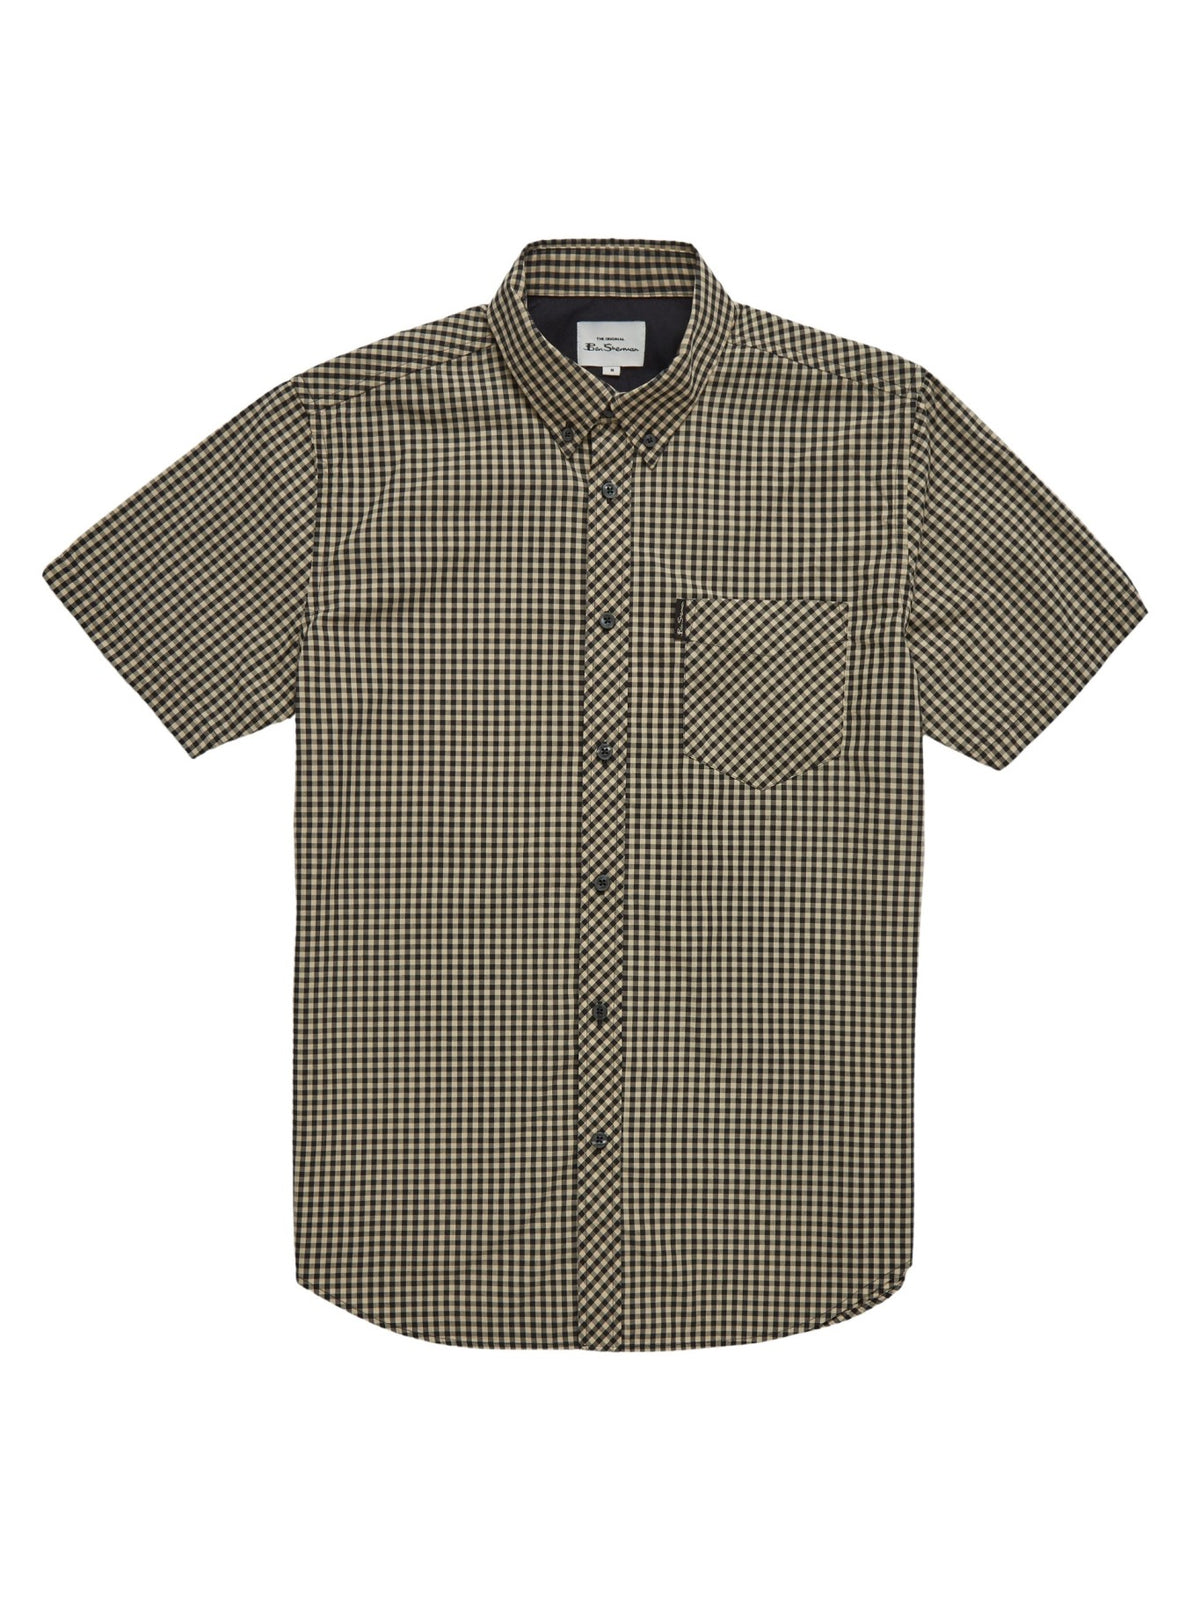 Ben Sherman Mens Signature Gingham Shirt - Short Sleeved, 06, 59142, Black